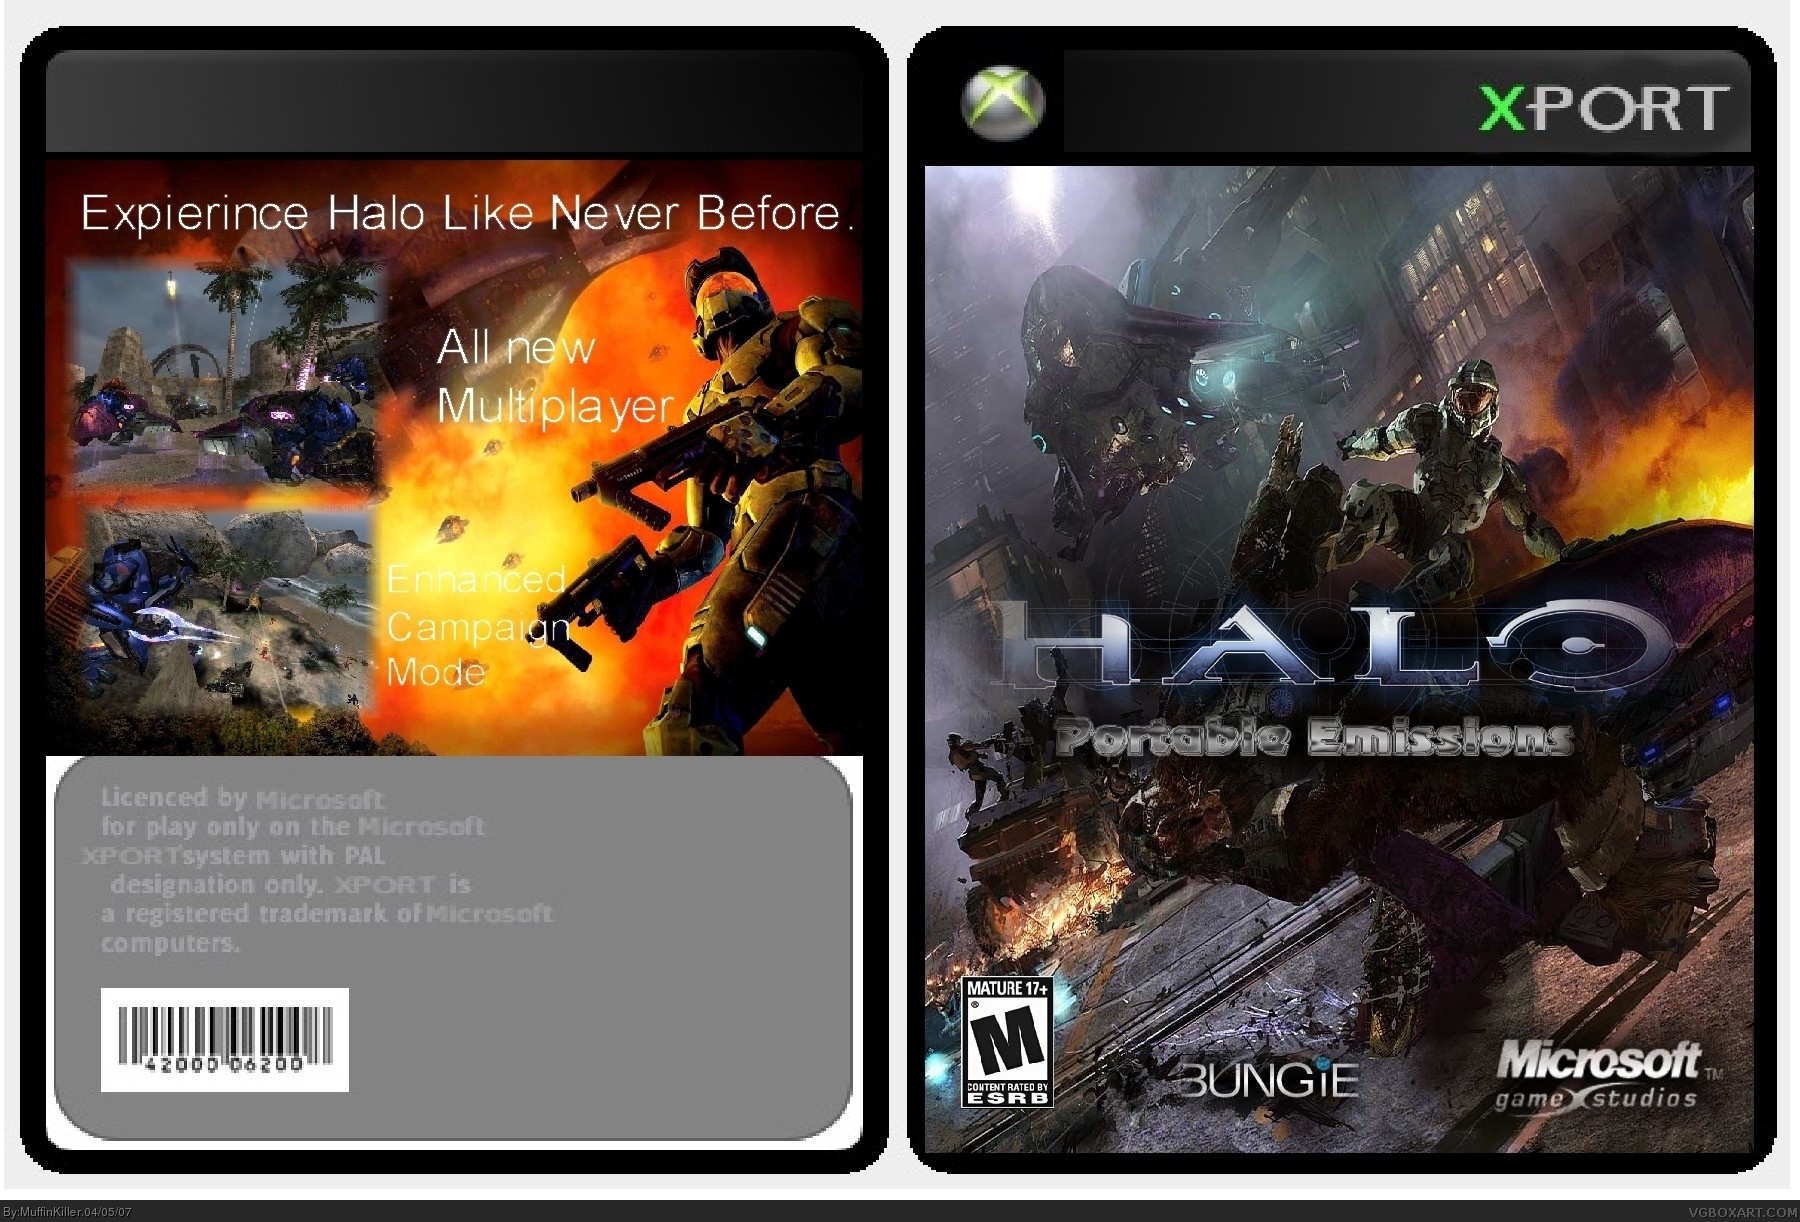 Halo: Portable Emissions box cover